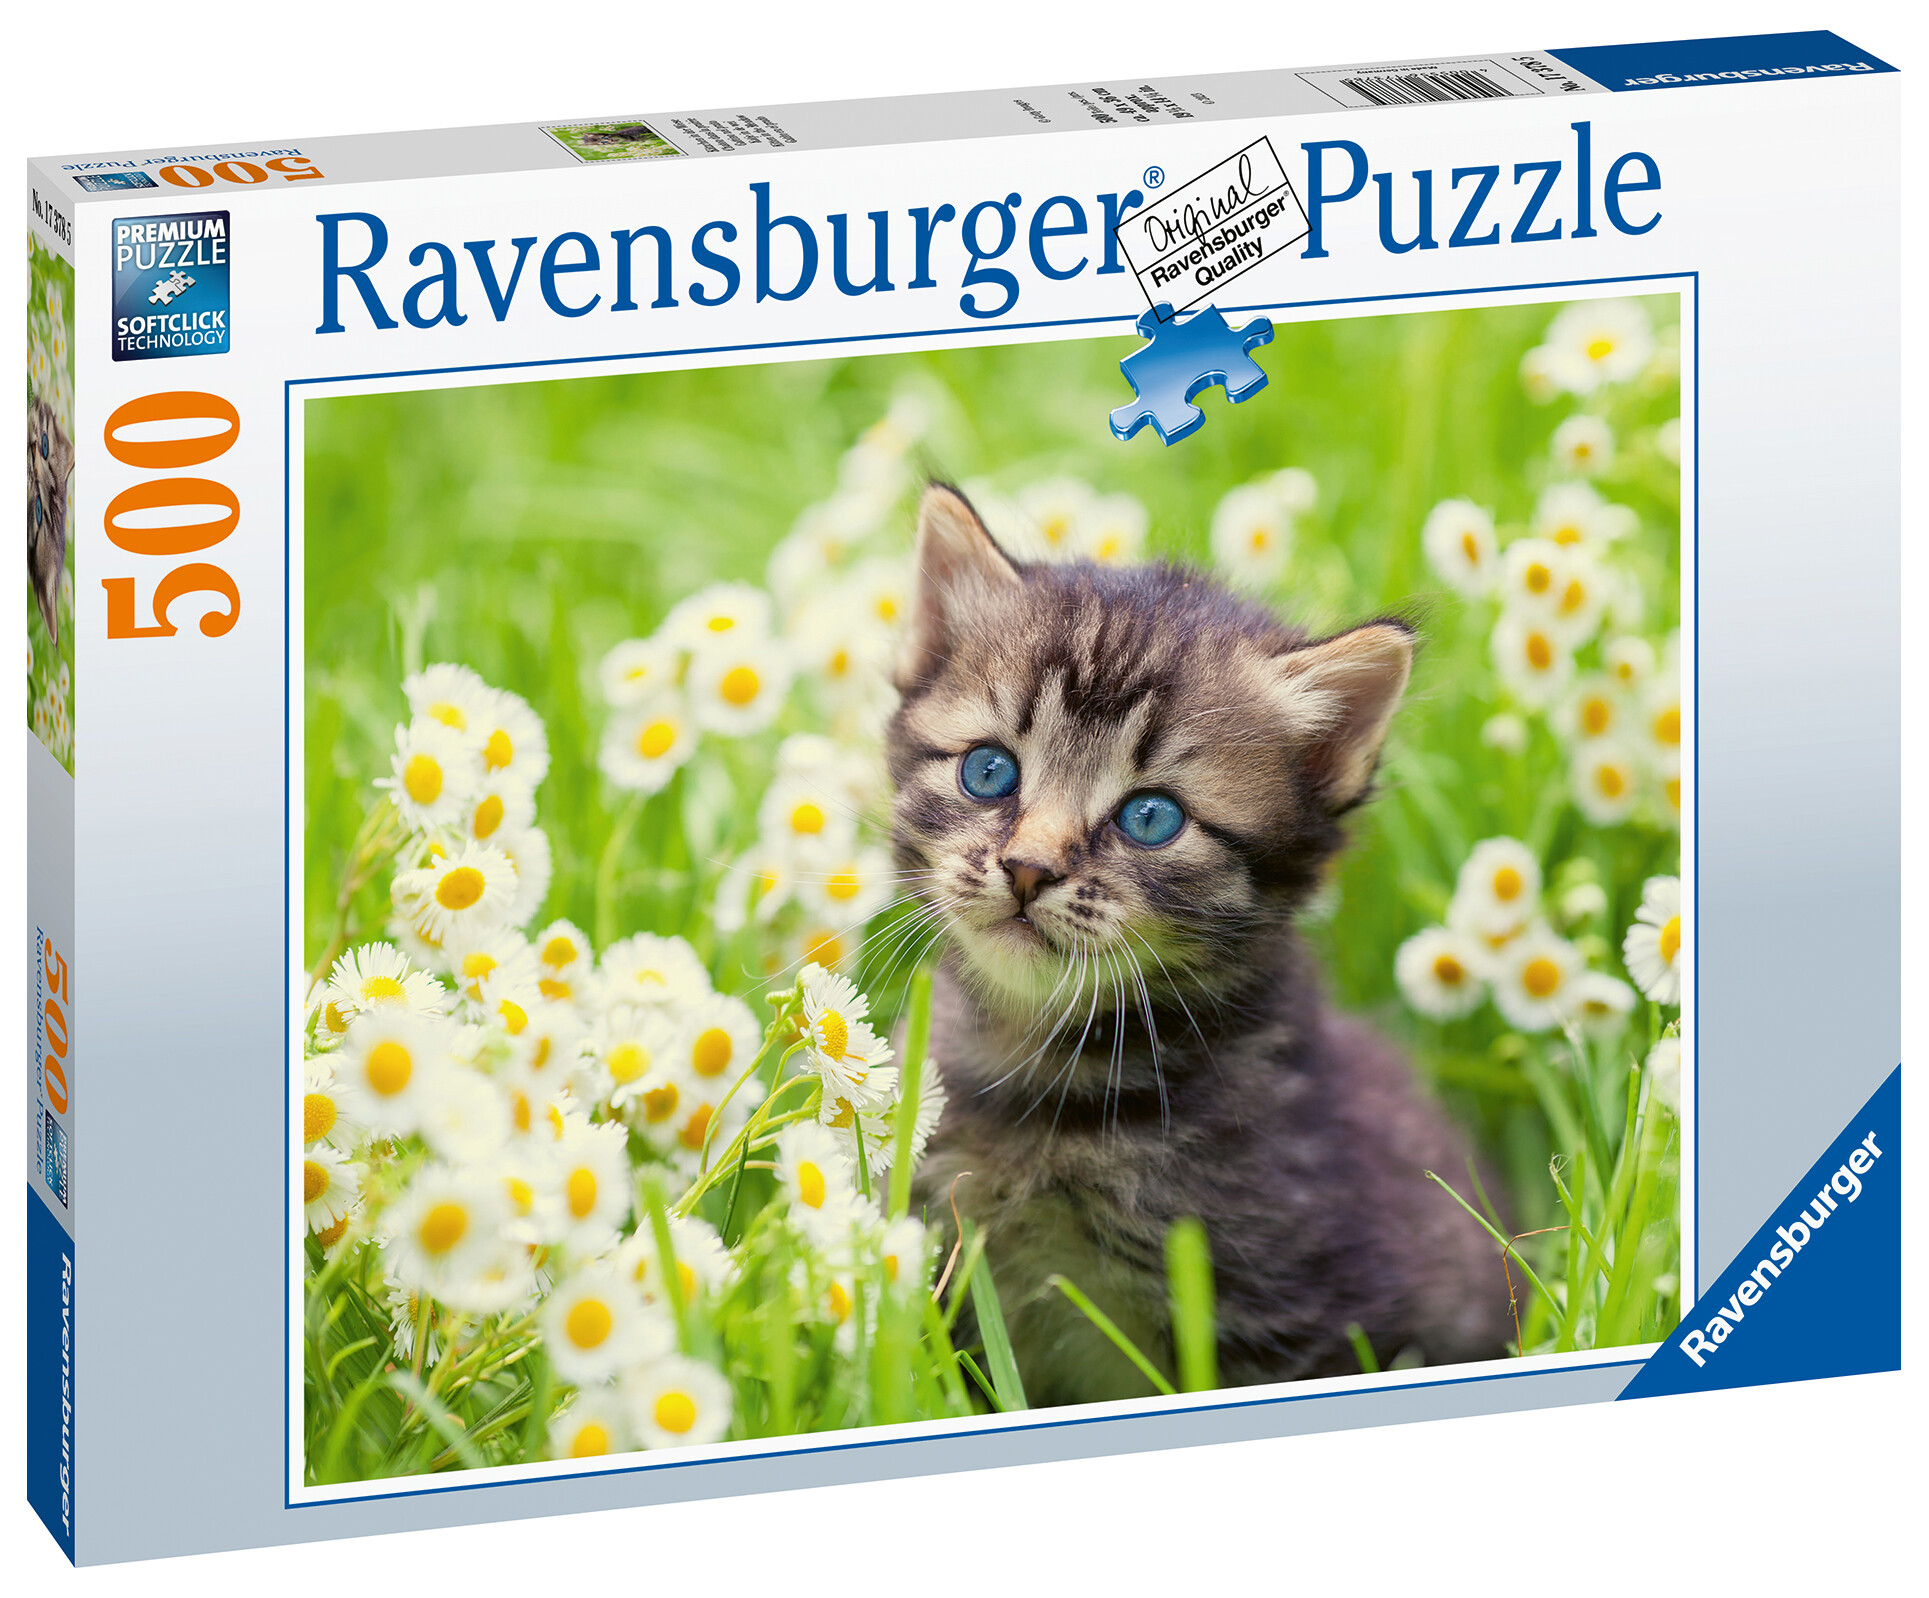 Ravensburger - puzzle gattino nel prato, 500 pezzi, puzzle adulti - RAVENSBURGER